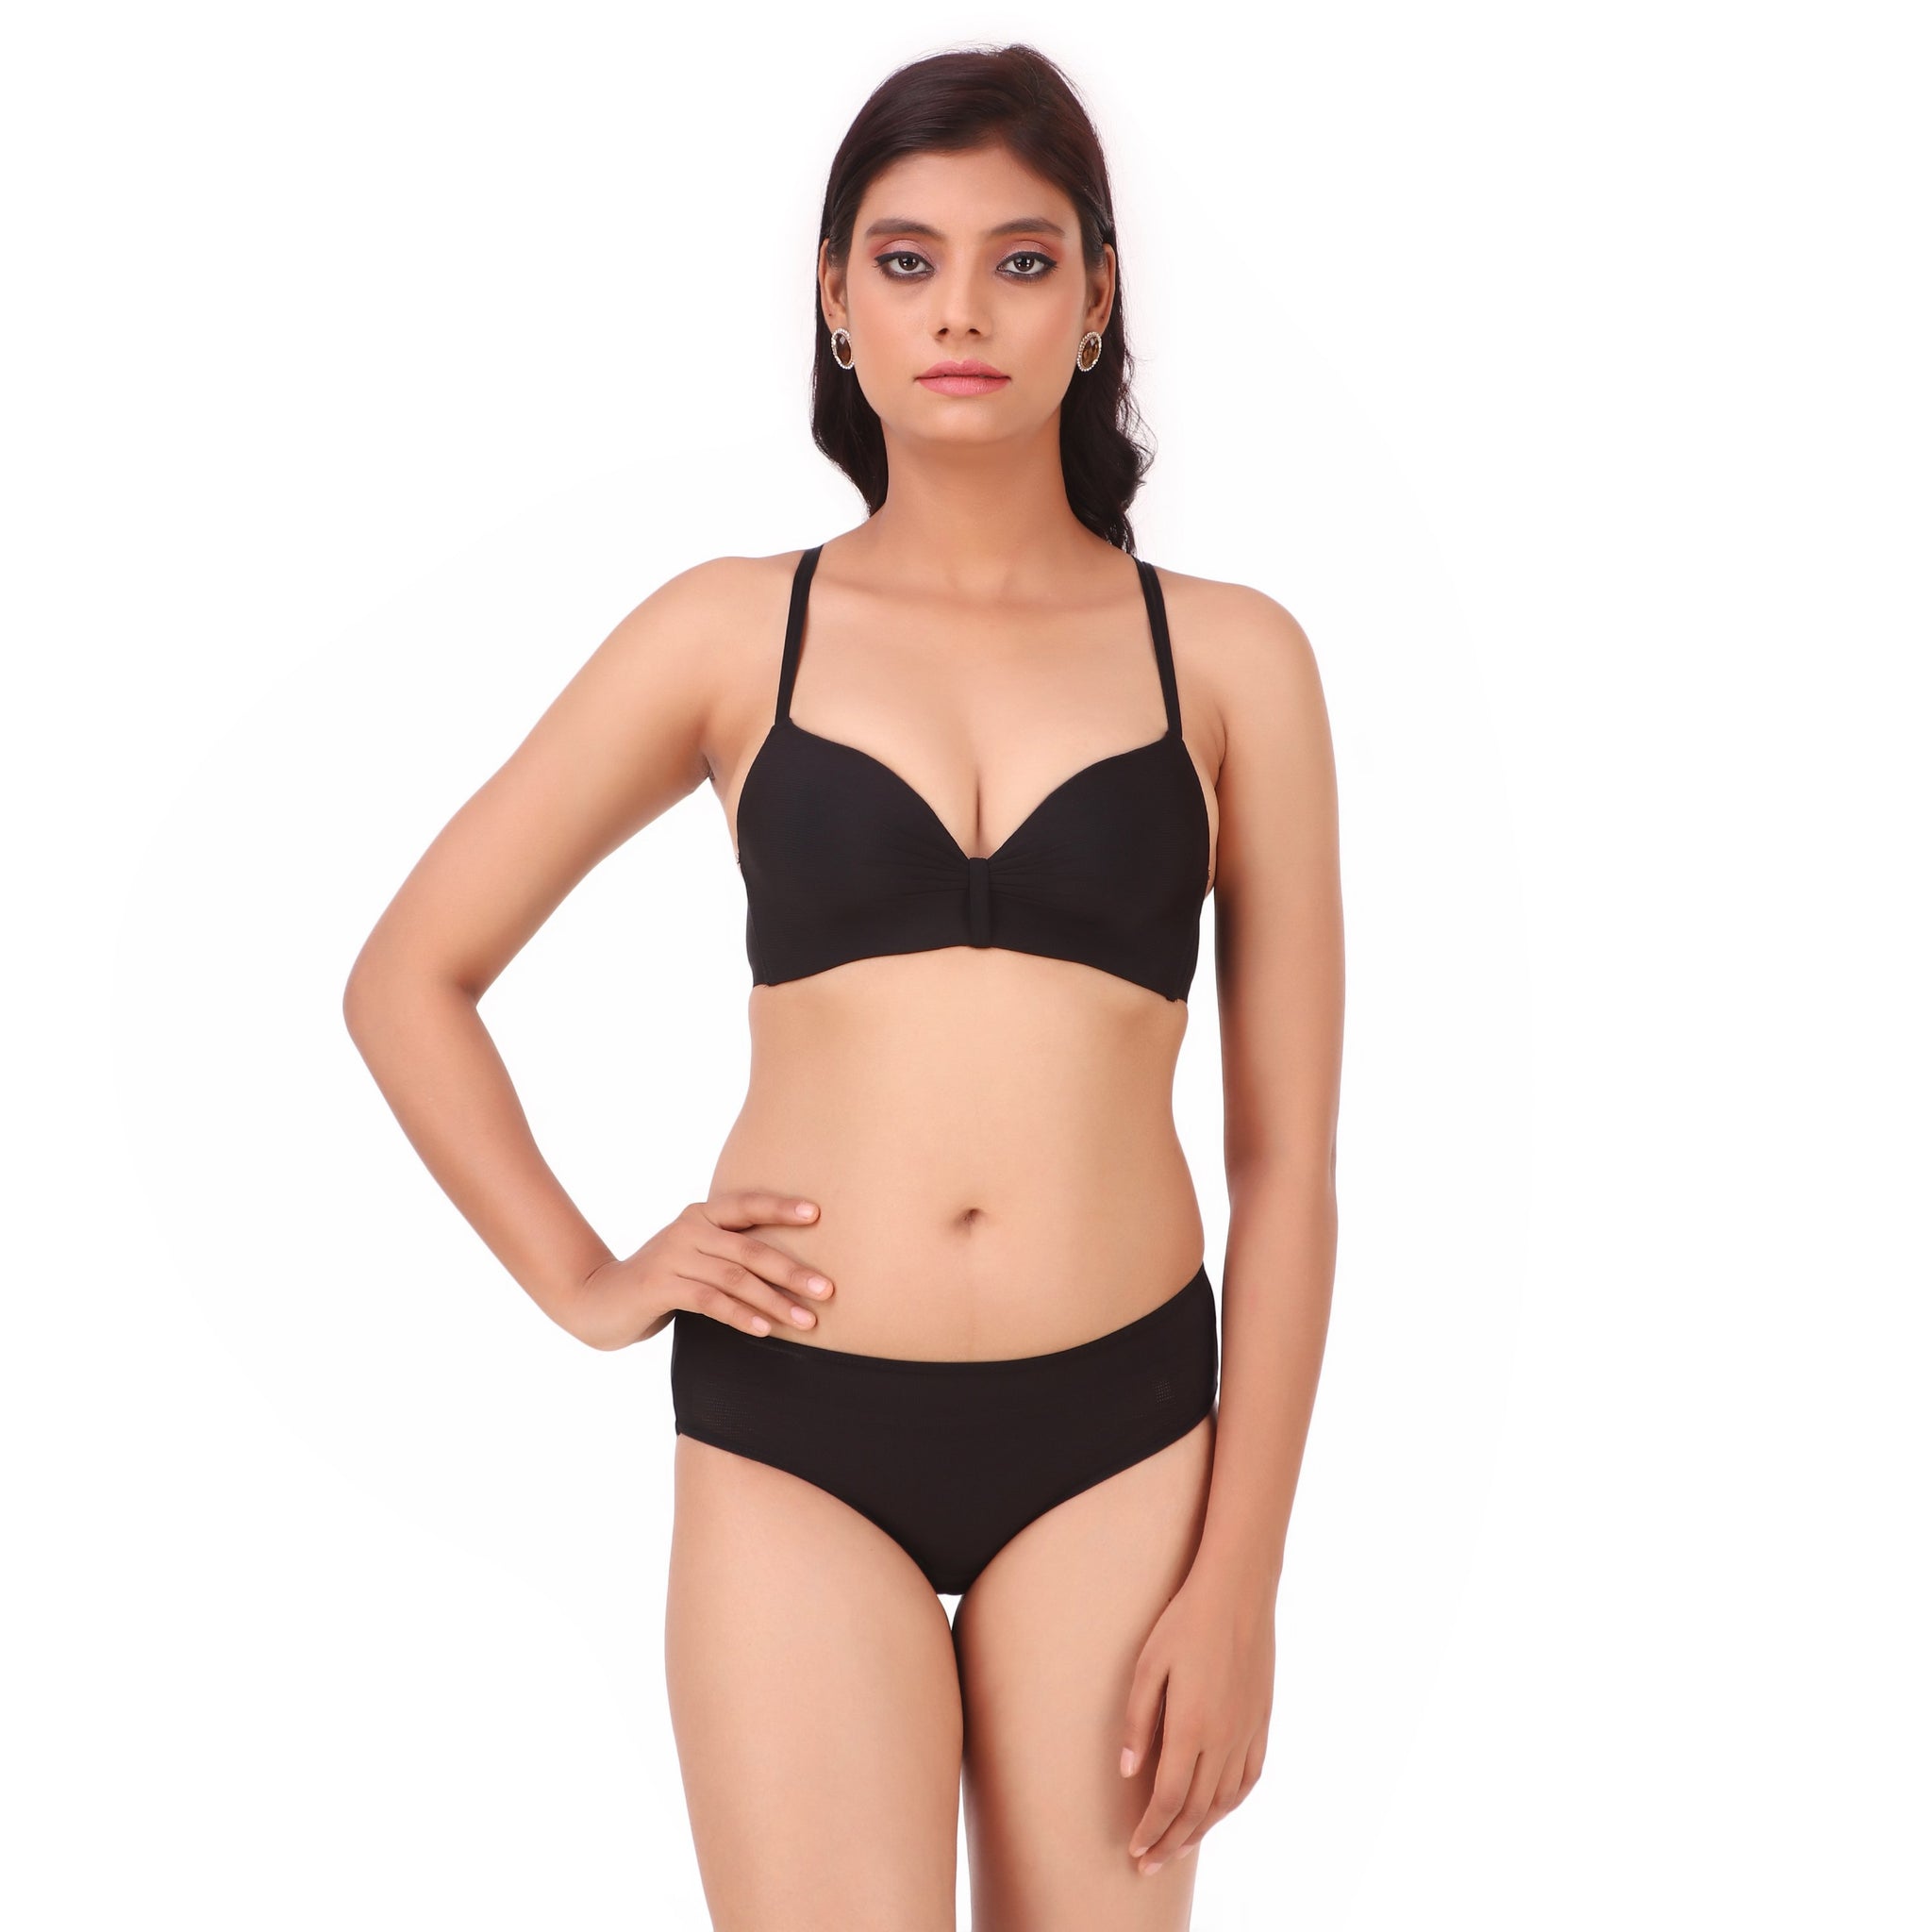 Buy Bra Panty Sets Online India  Buy Lingerie Sets for Women Online -  Savvyy